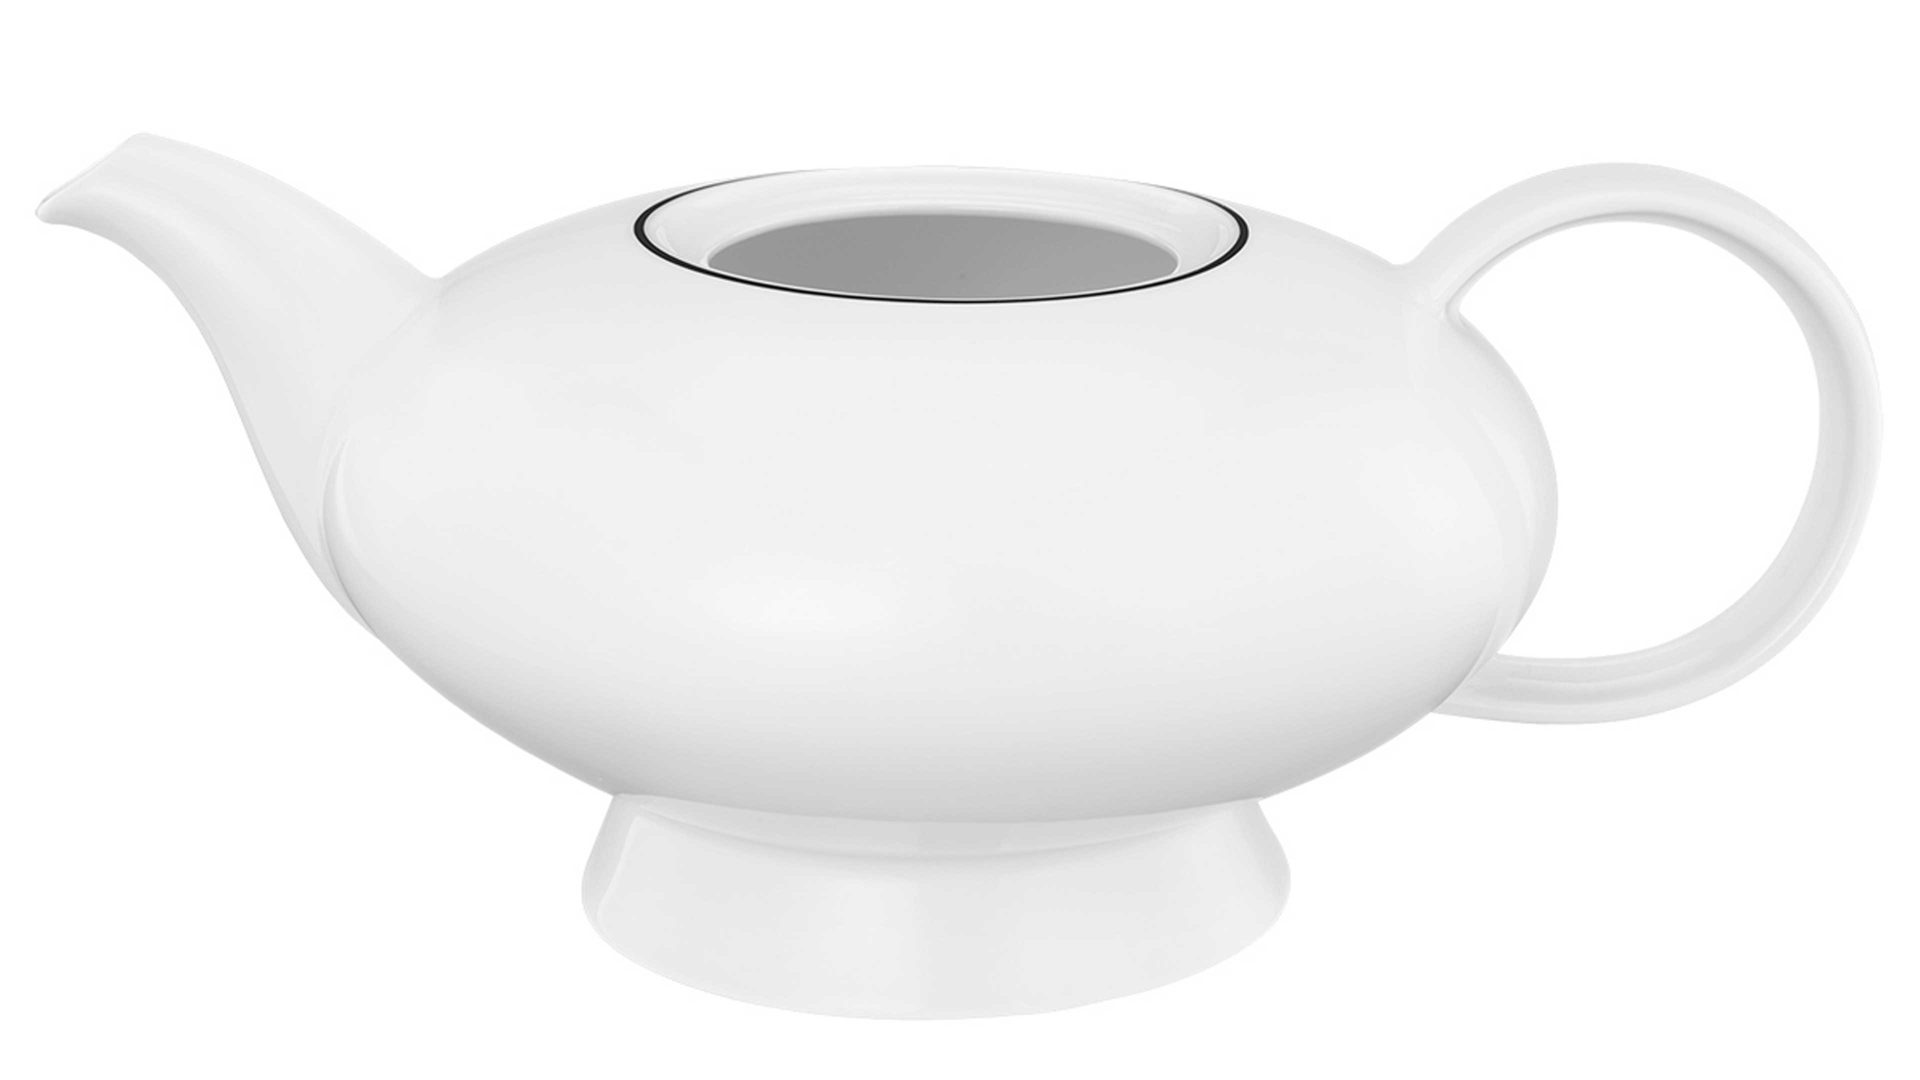 Teekanne Seltmann aus Porzellan in Weiß Seltmann Lido – Teekanne weißes Porzellan – Fassungsvermögen ca. 1250 ml